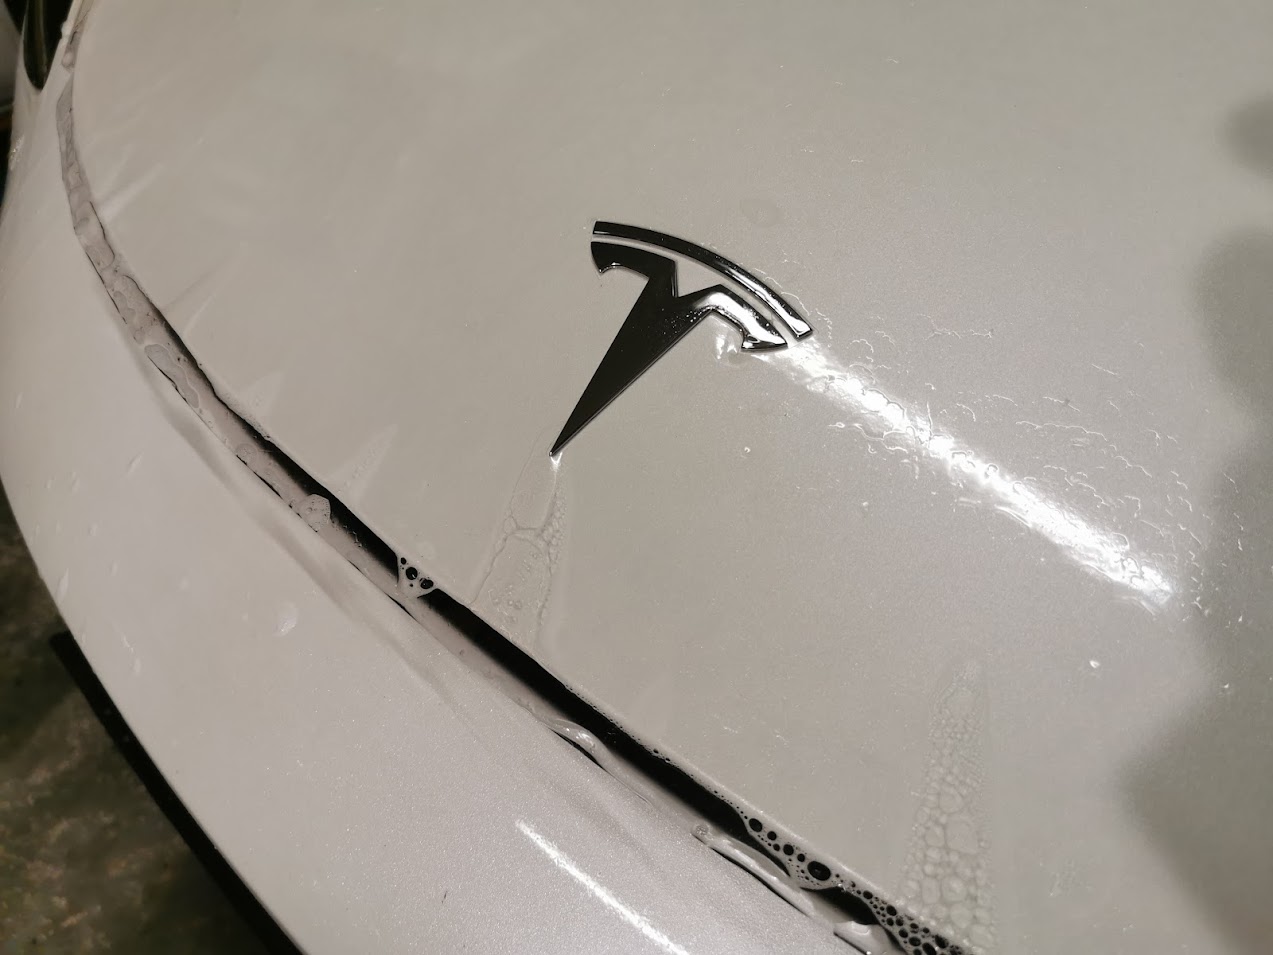 Protection PPF 3M ScotchGard bas de caisse - Tesla Model 3